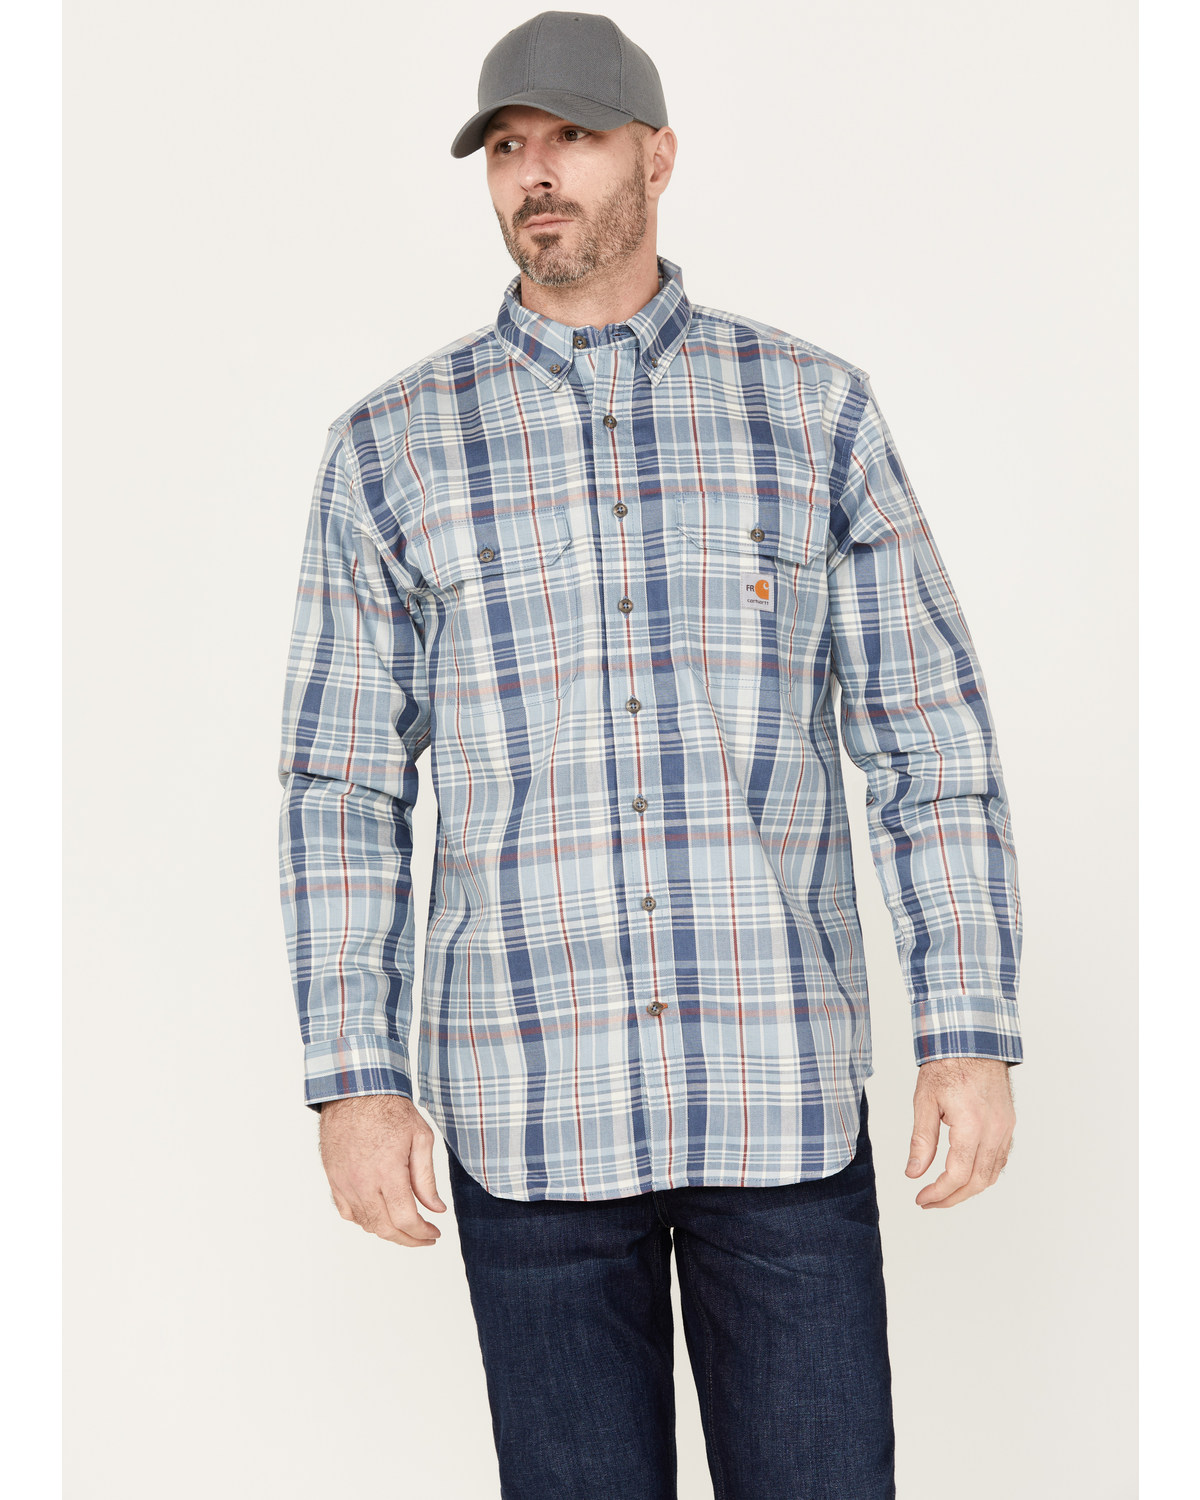 Carhartt Men's FR Force Loose Fit Twill Plaid Print Long Sleeve Button Down Work Shirt